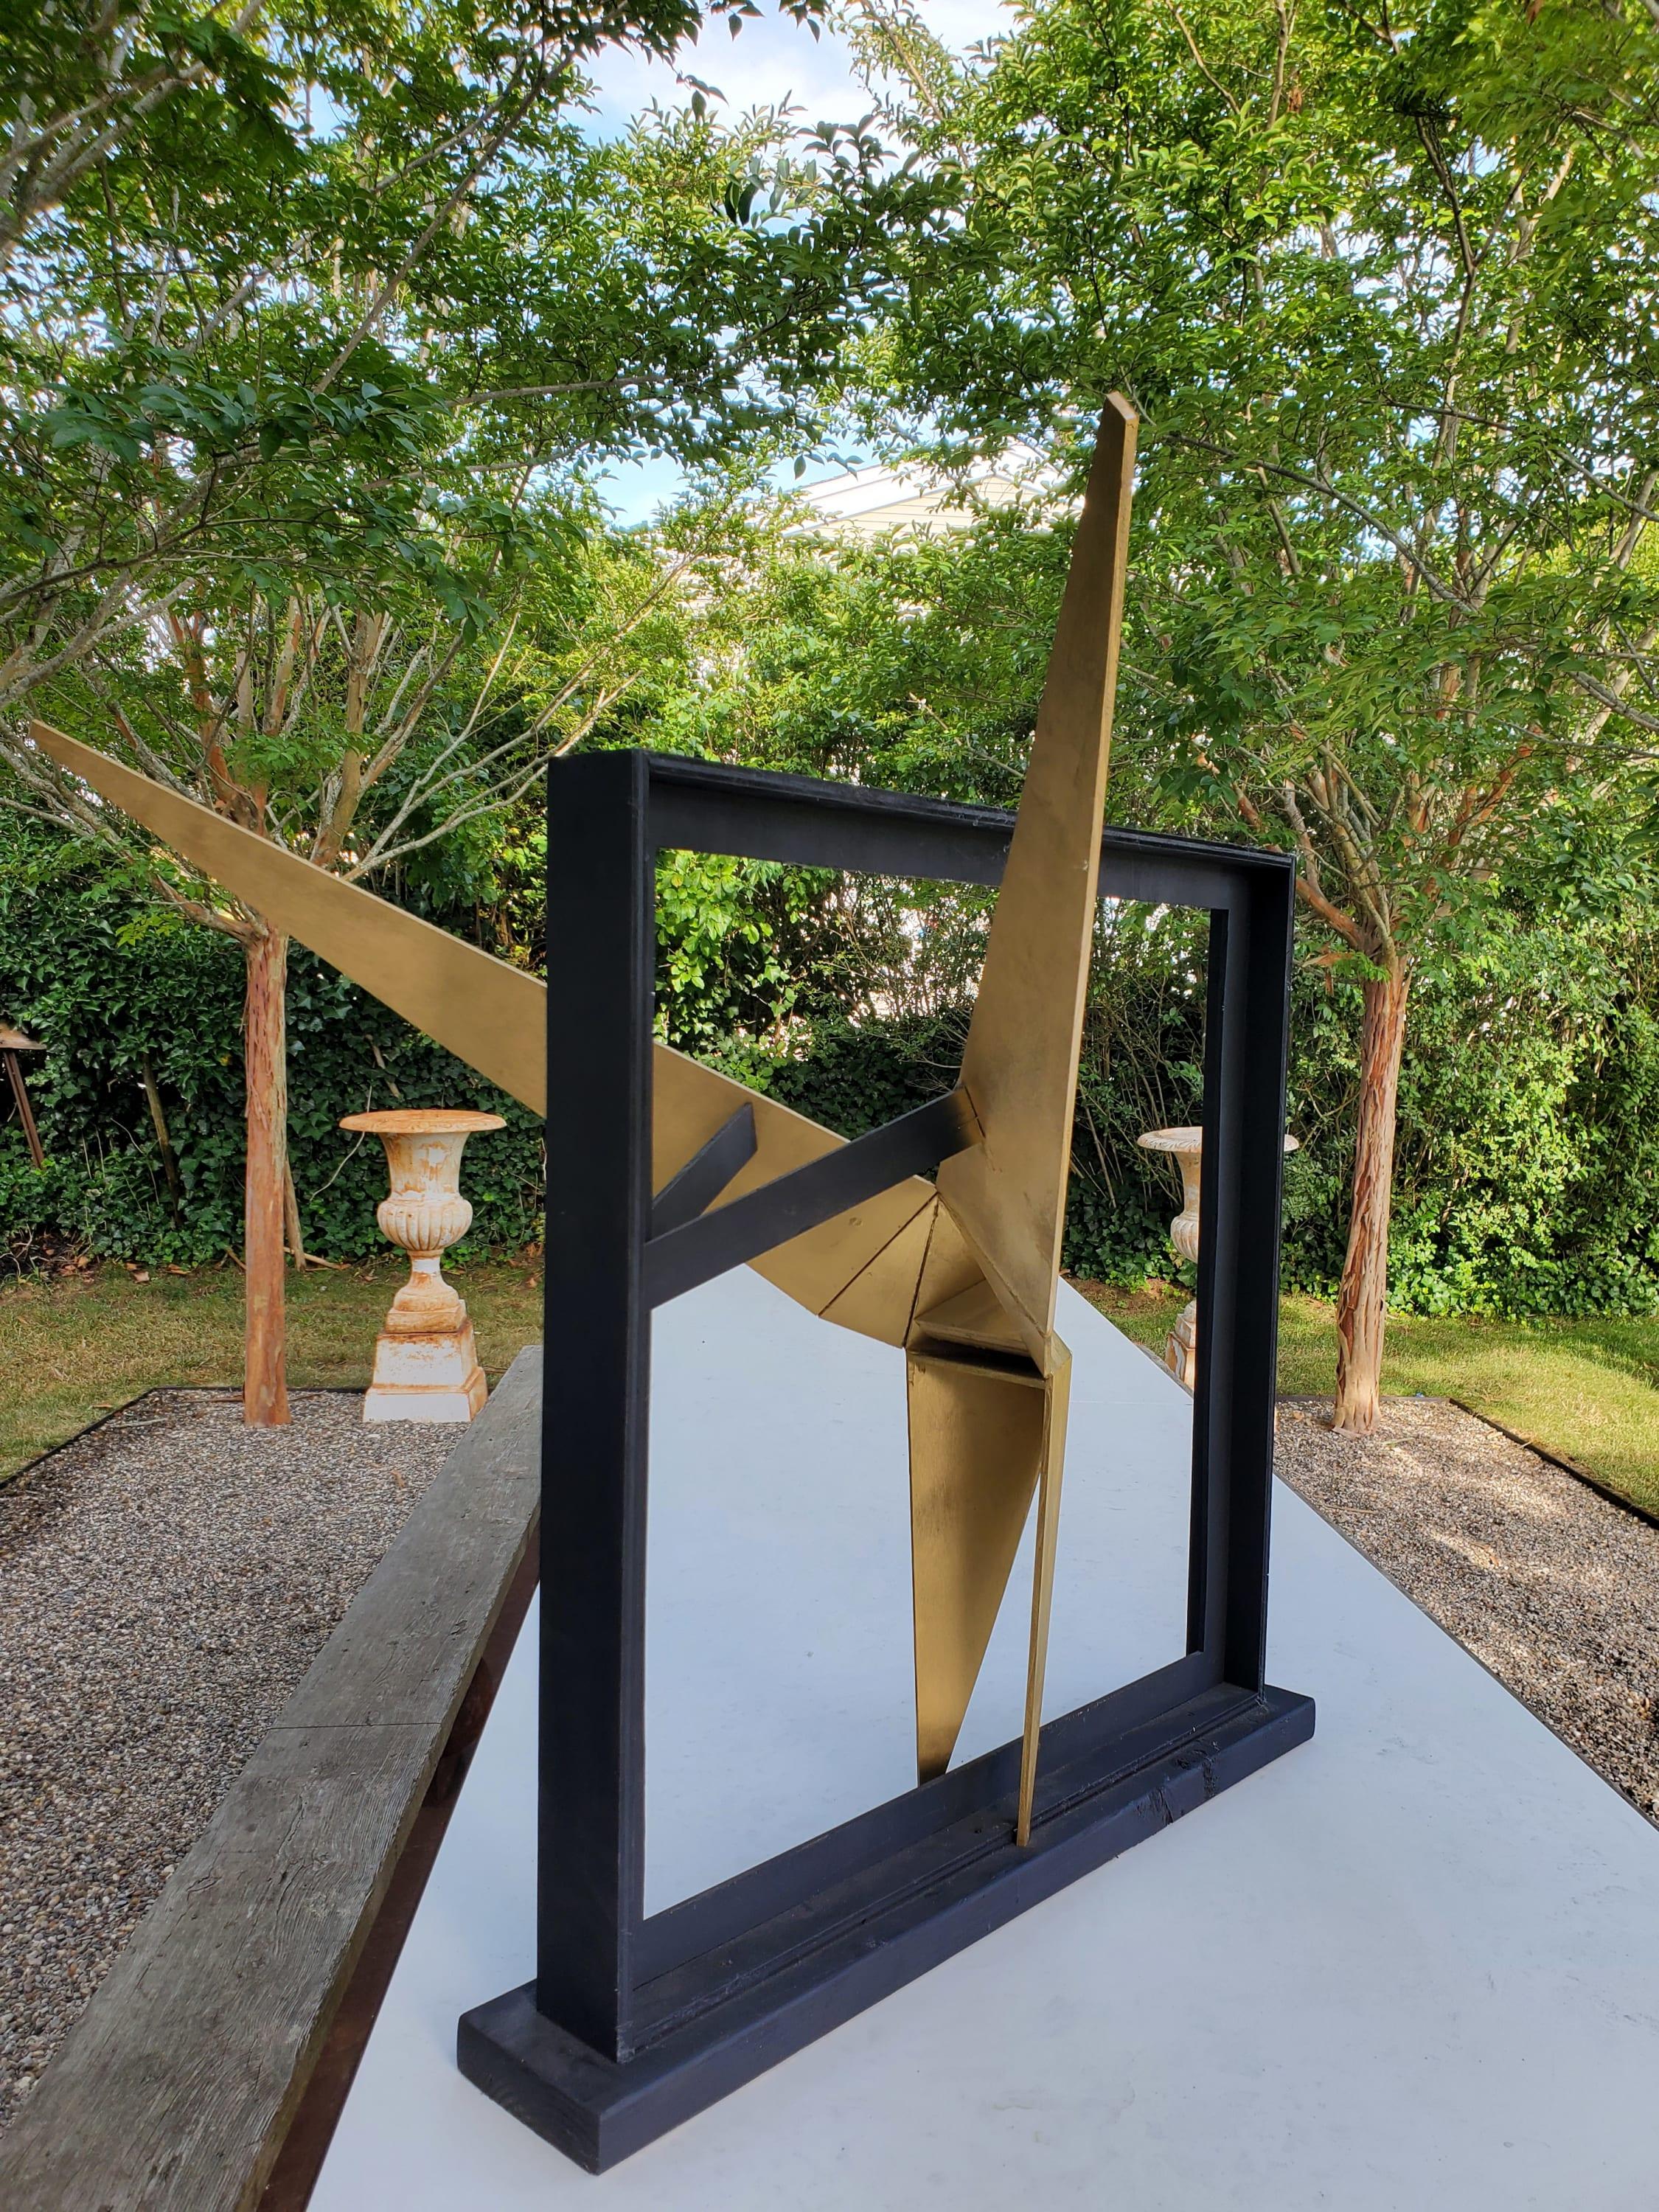 Golden Ballerina - Sculpture by J. Oscar Molina